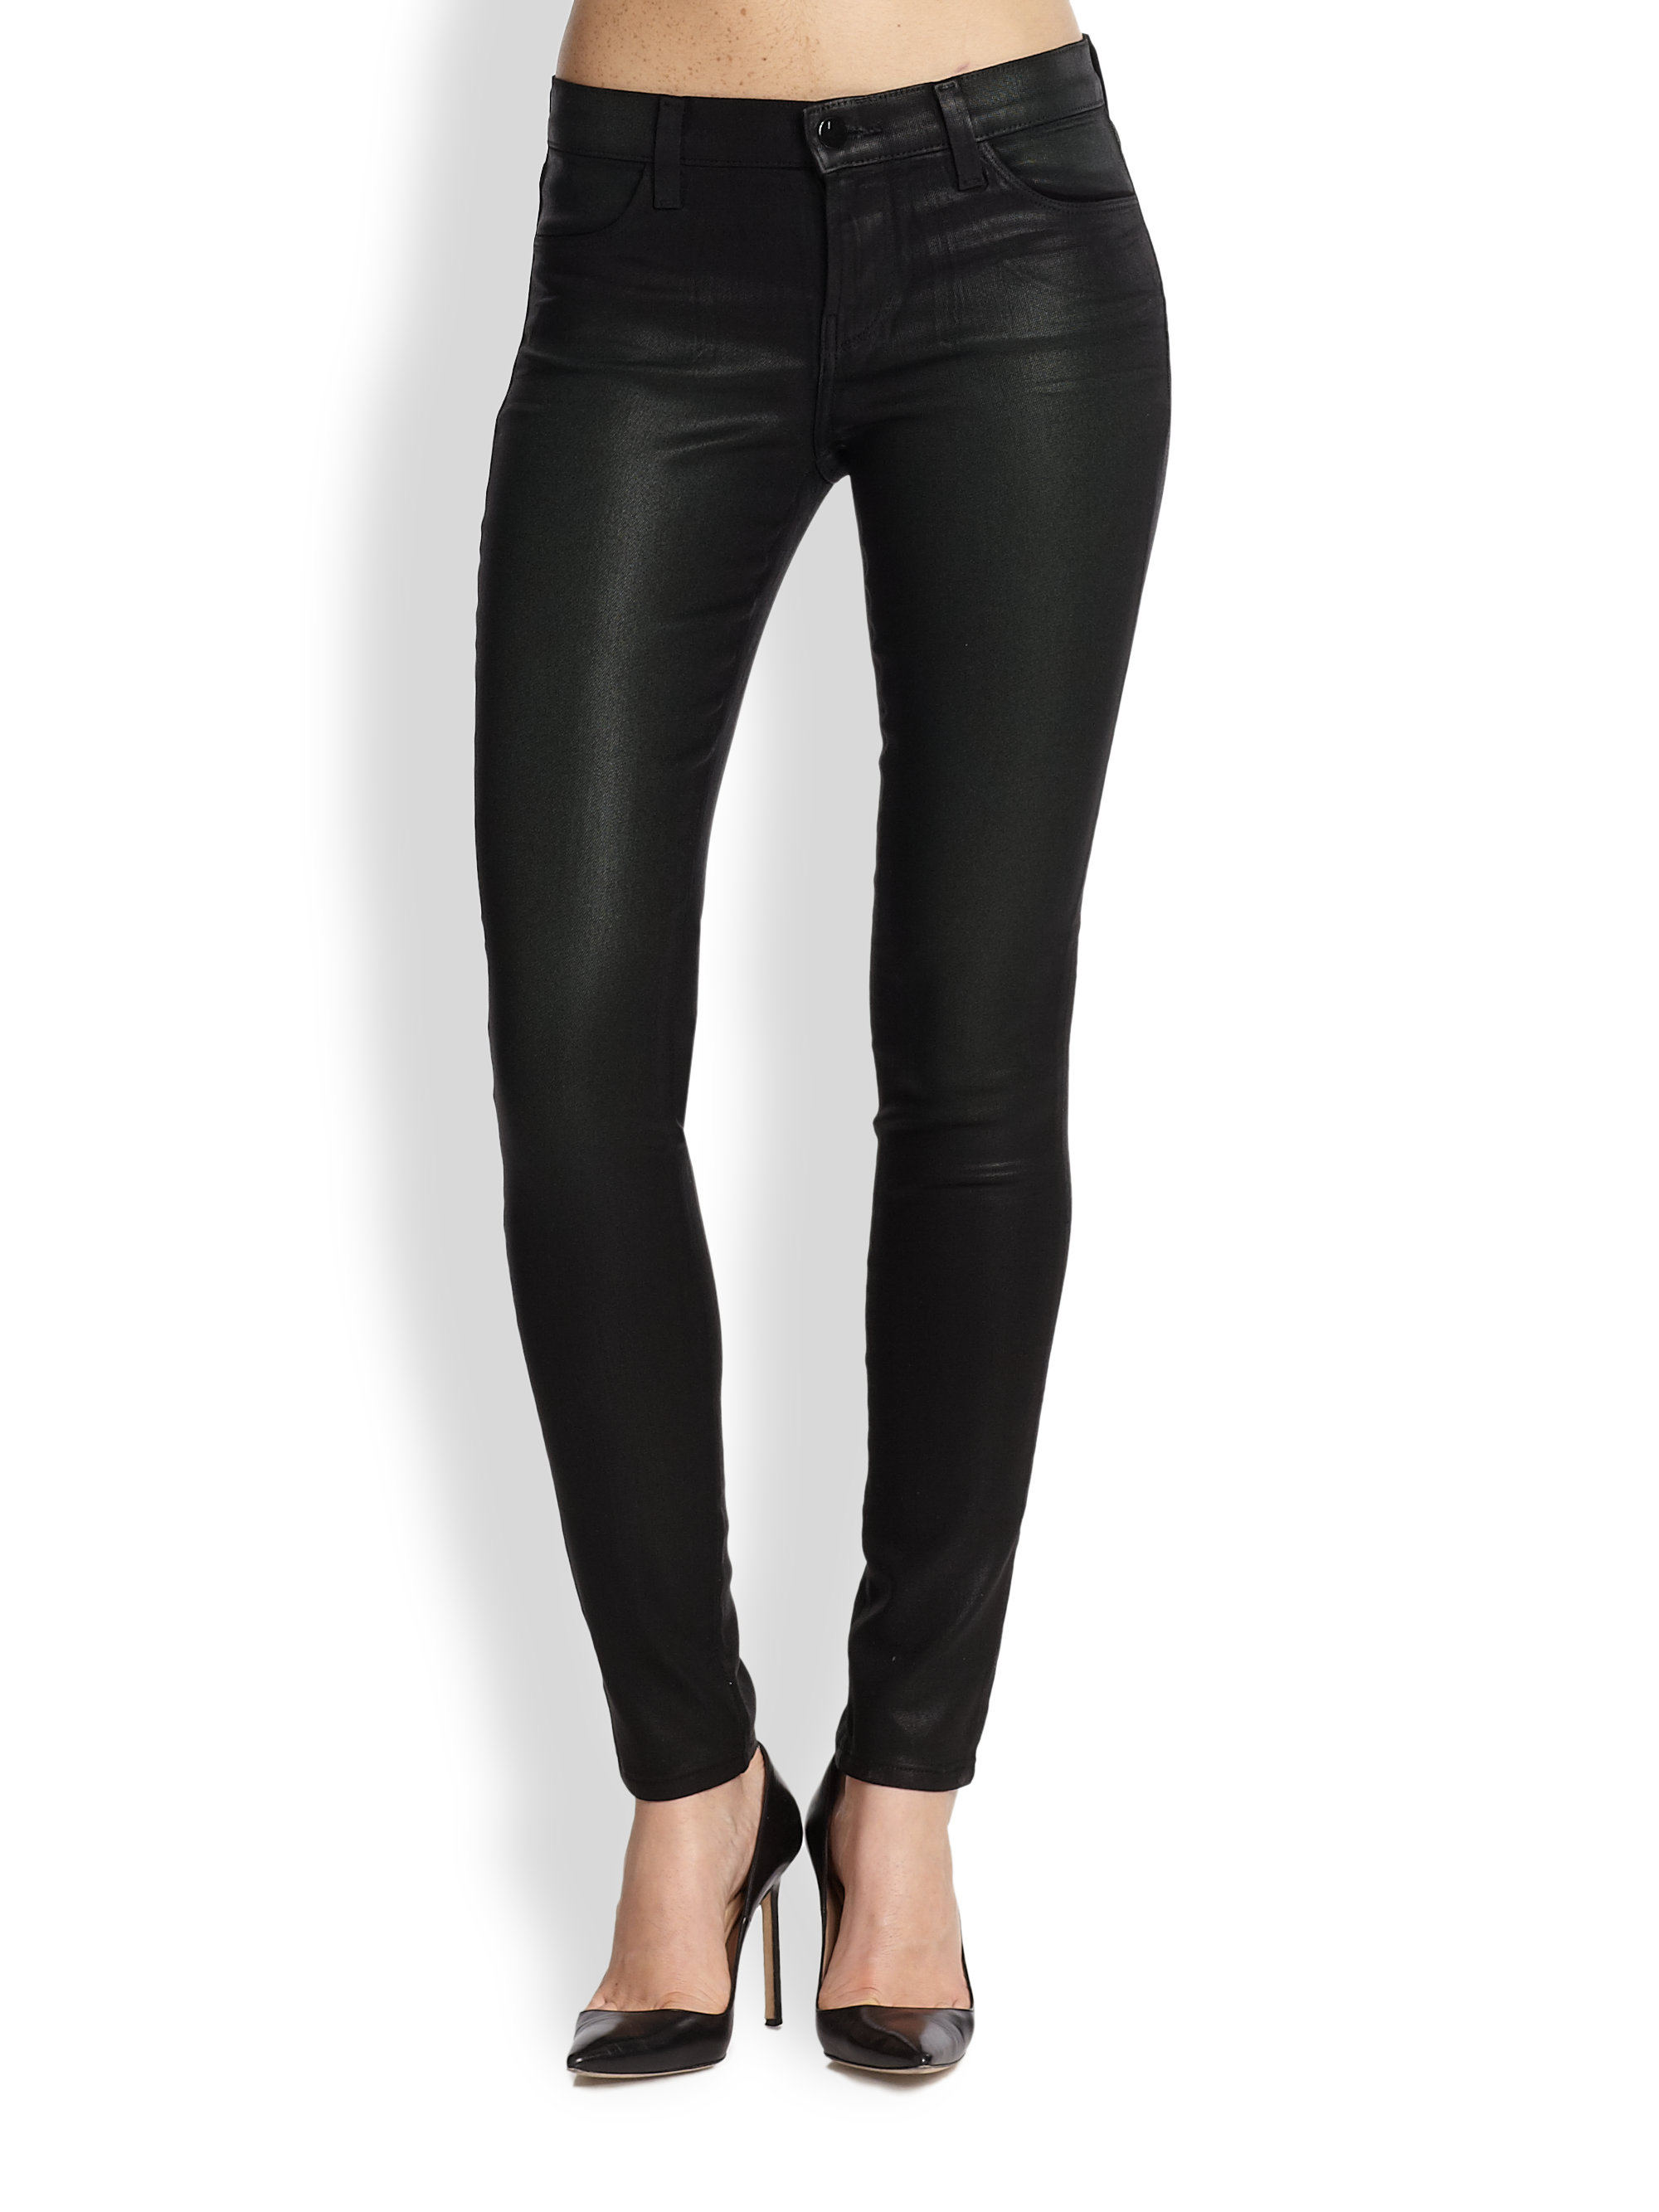 Lyst - J brand Coated Super Skinny Jeans in Black